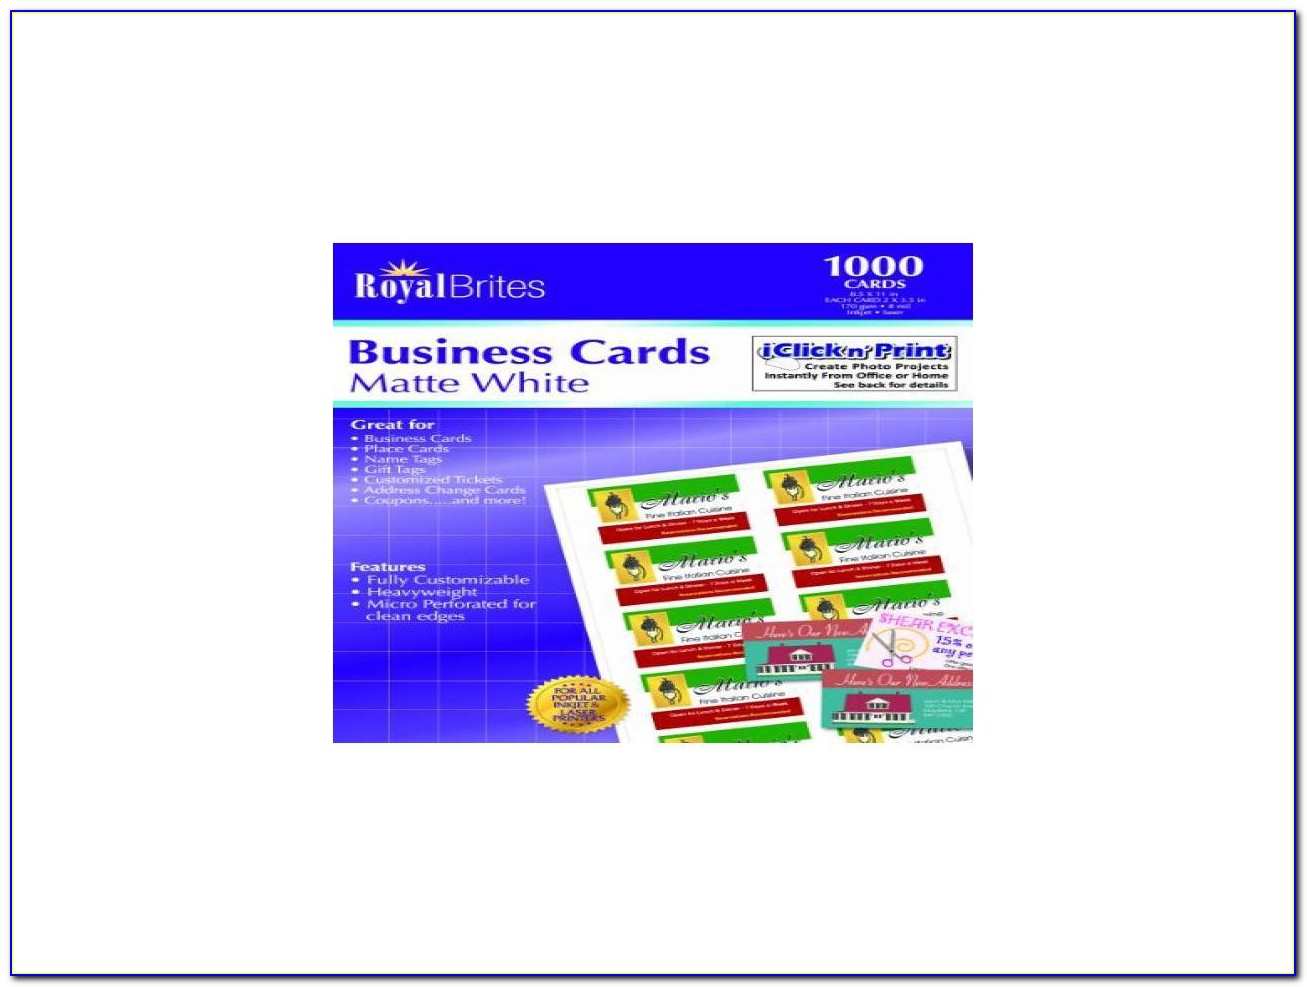 Royal Brites Business Cards 1000